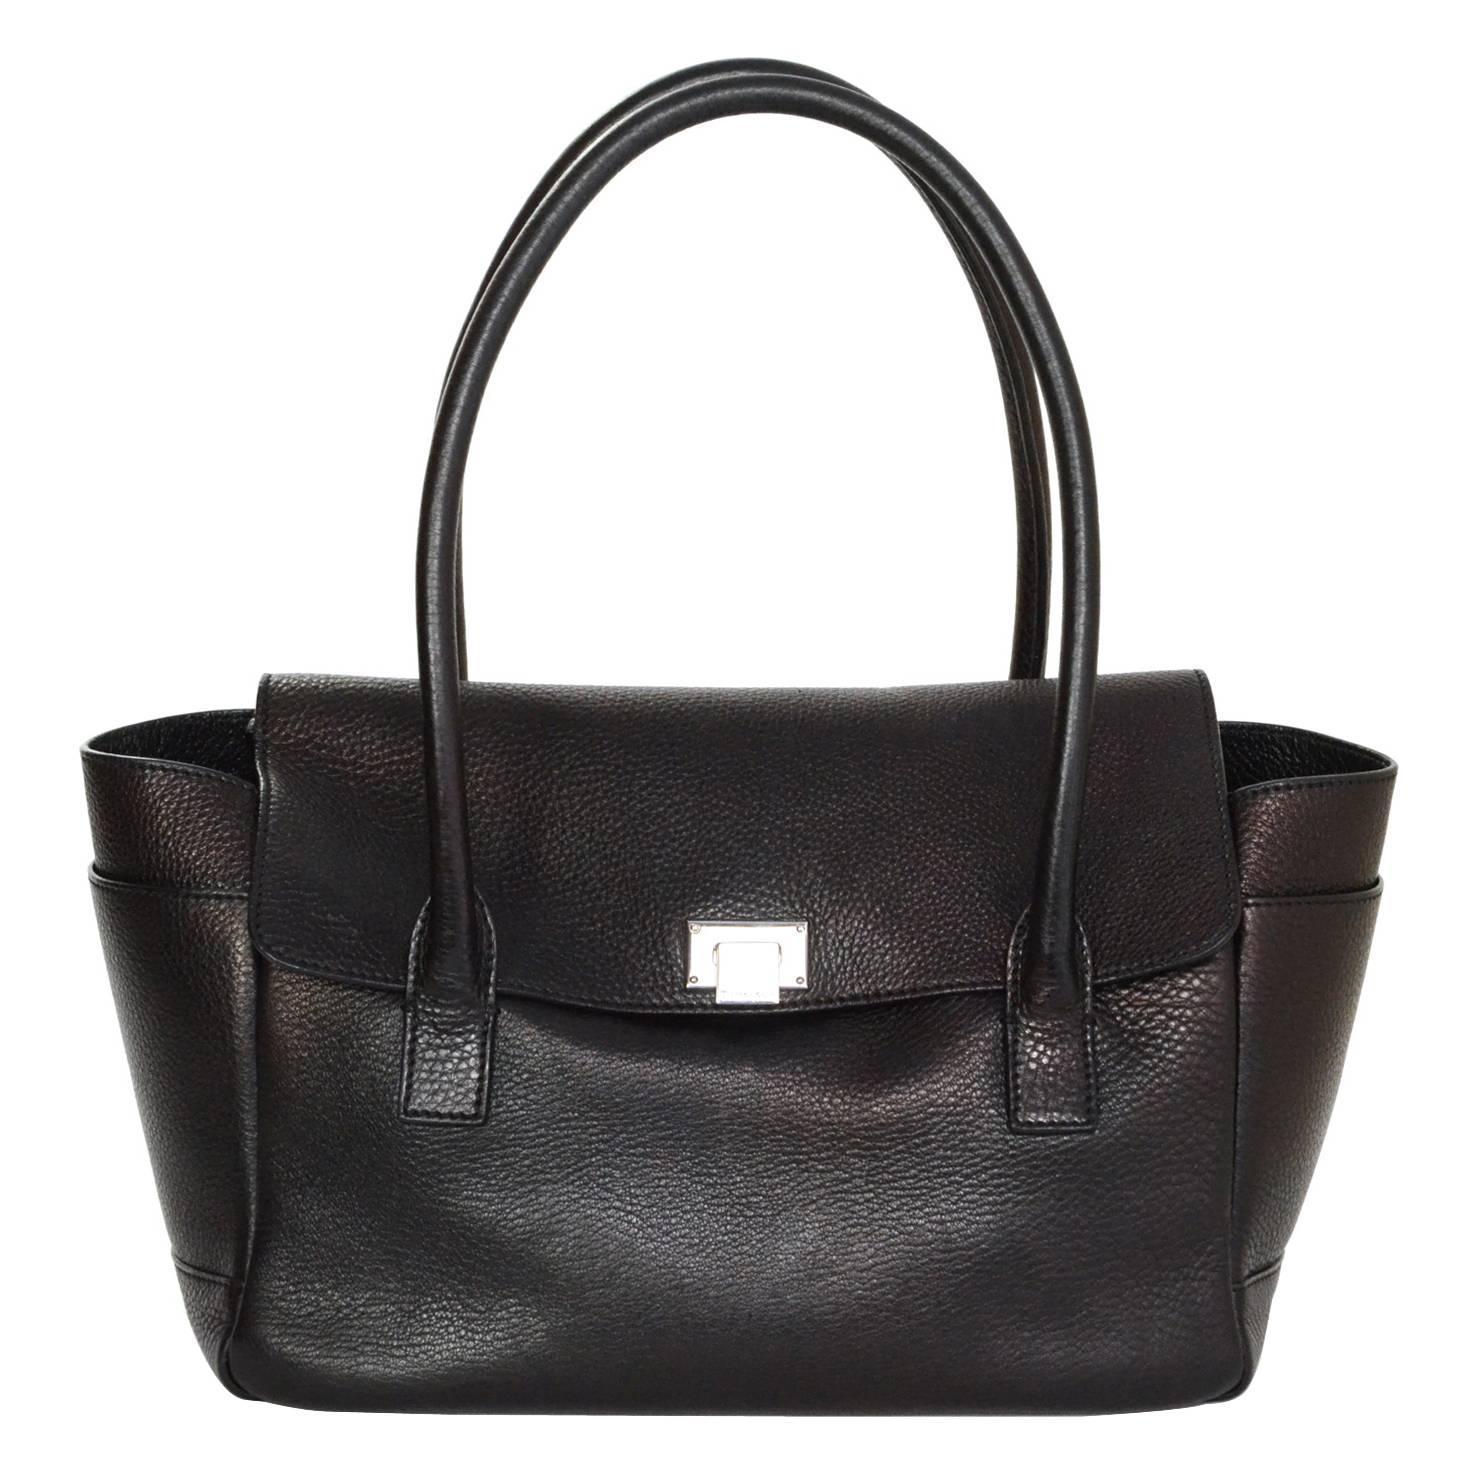 Tiffany and Co. Black Leather Shoulder Bag For Sale at 1stdibs